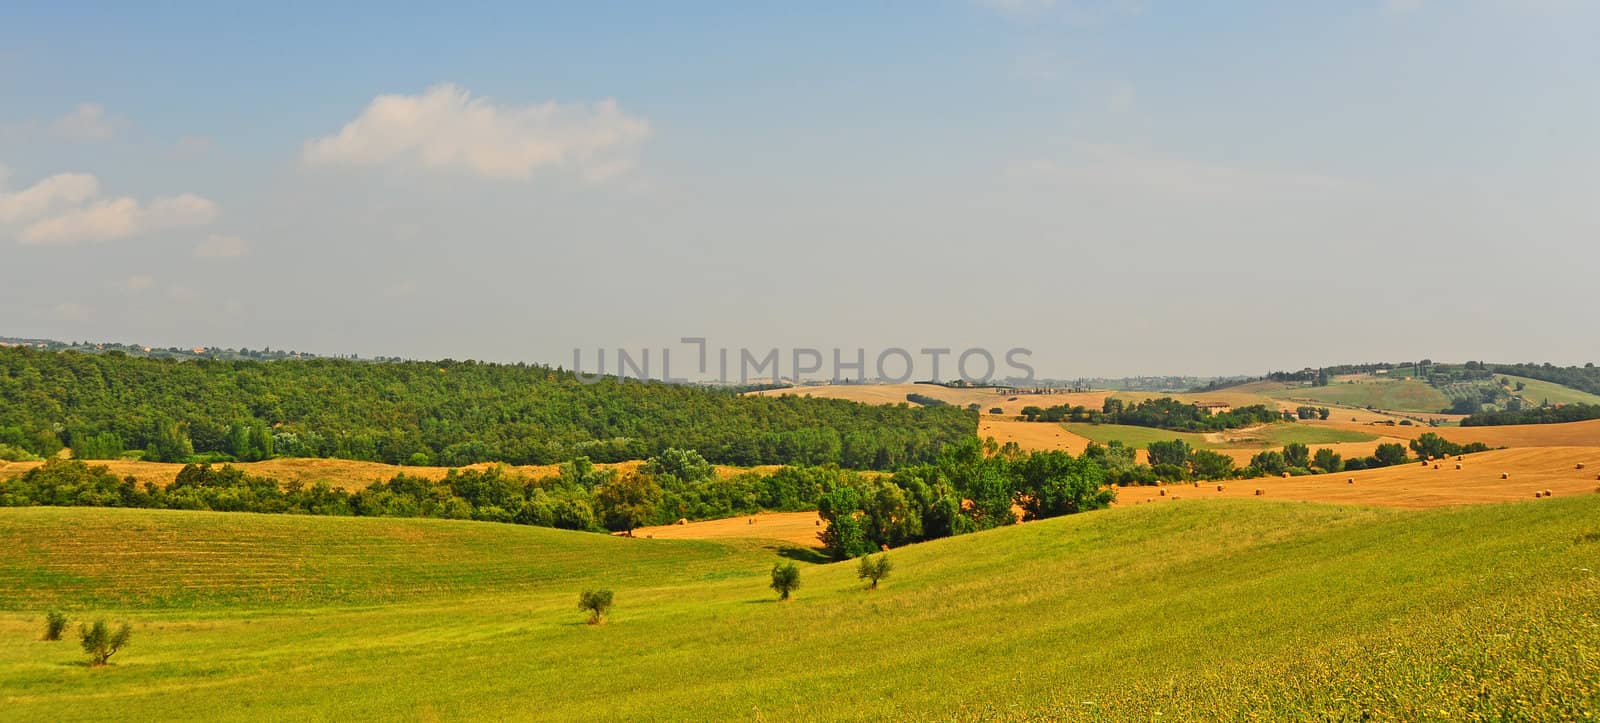 Tuscany Landscape by gkuna